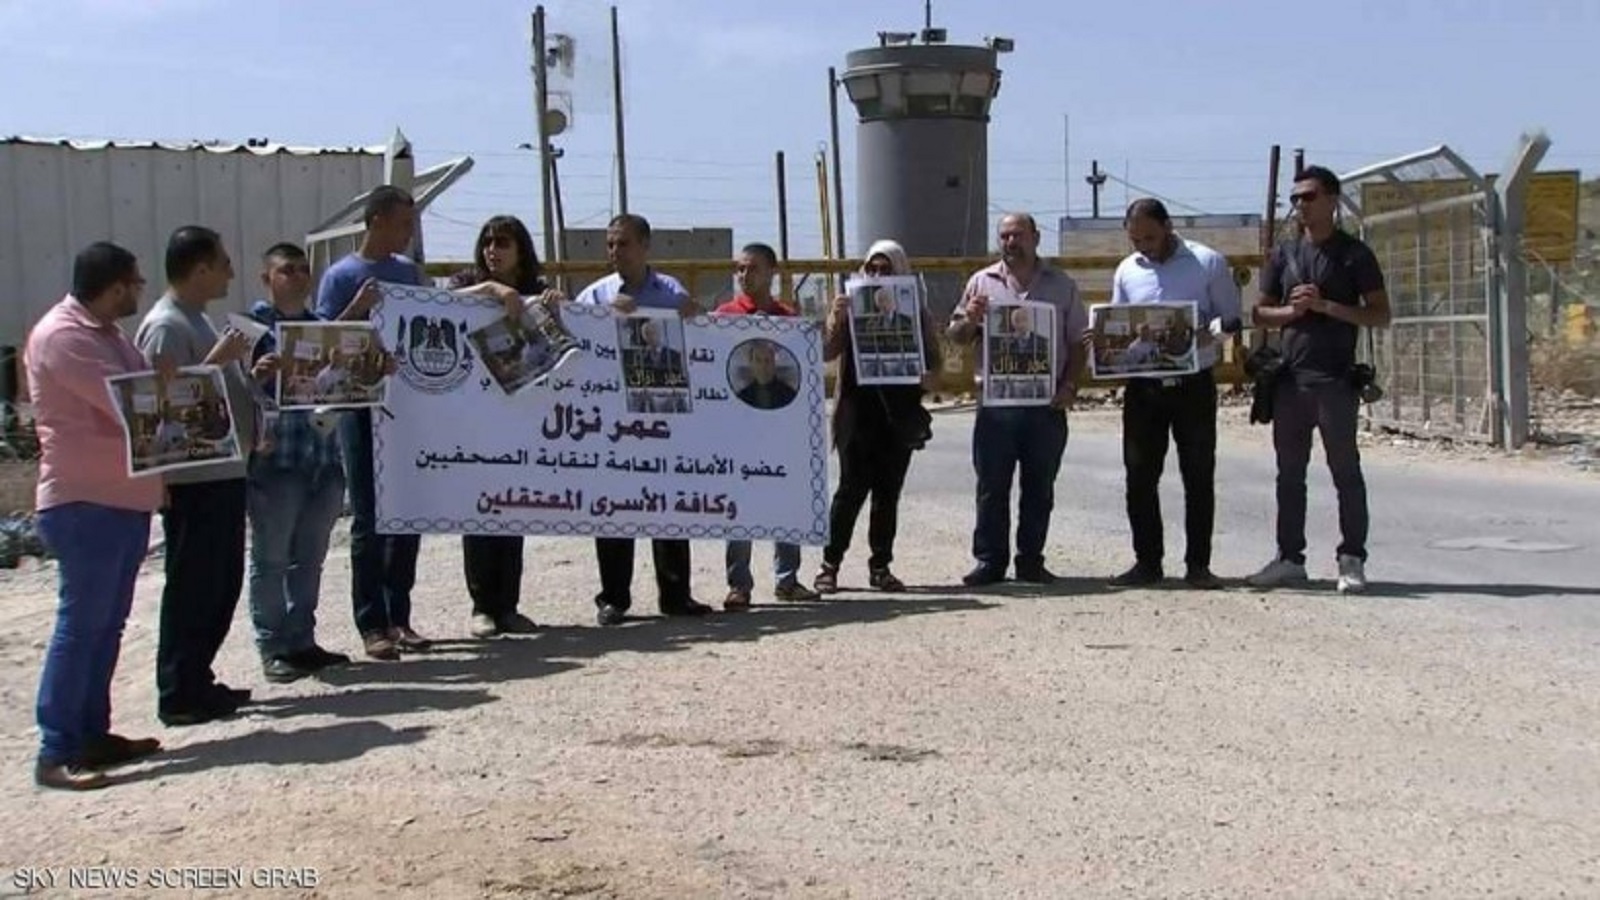 صحافيون فلسطينيون ينظمون وقفة لأجل زملائهم المعتقلين